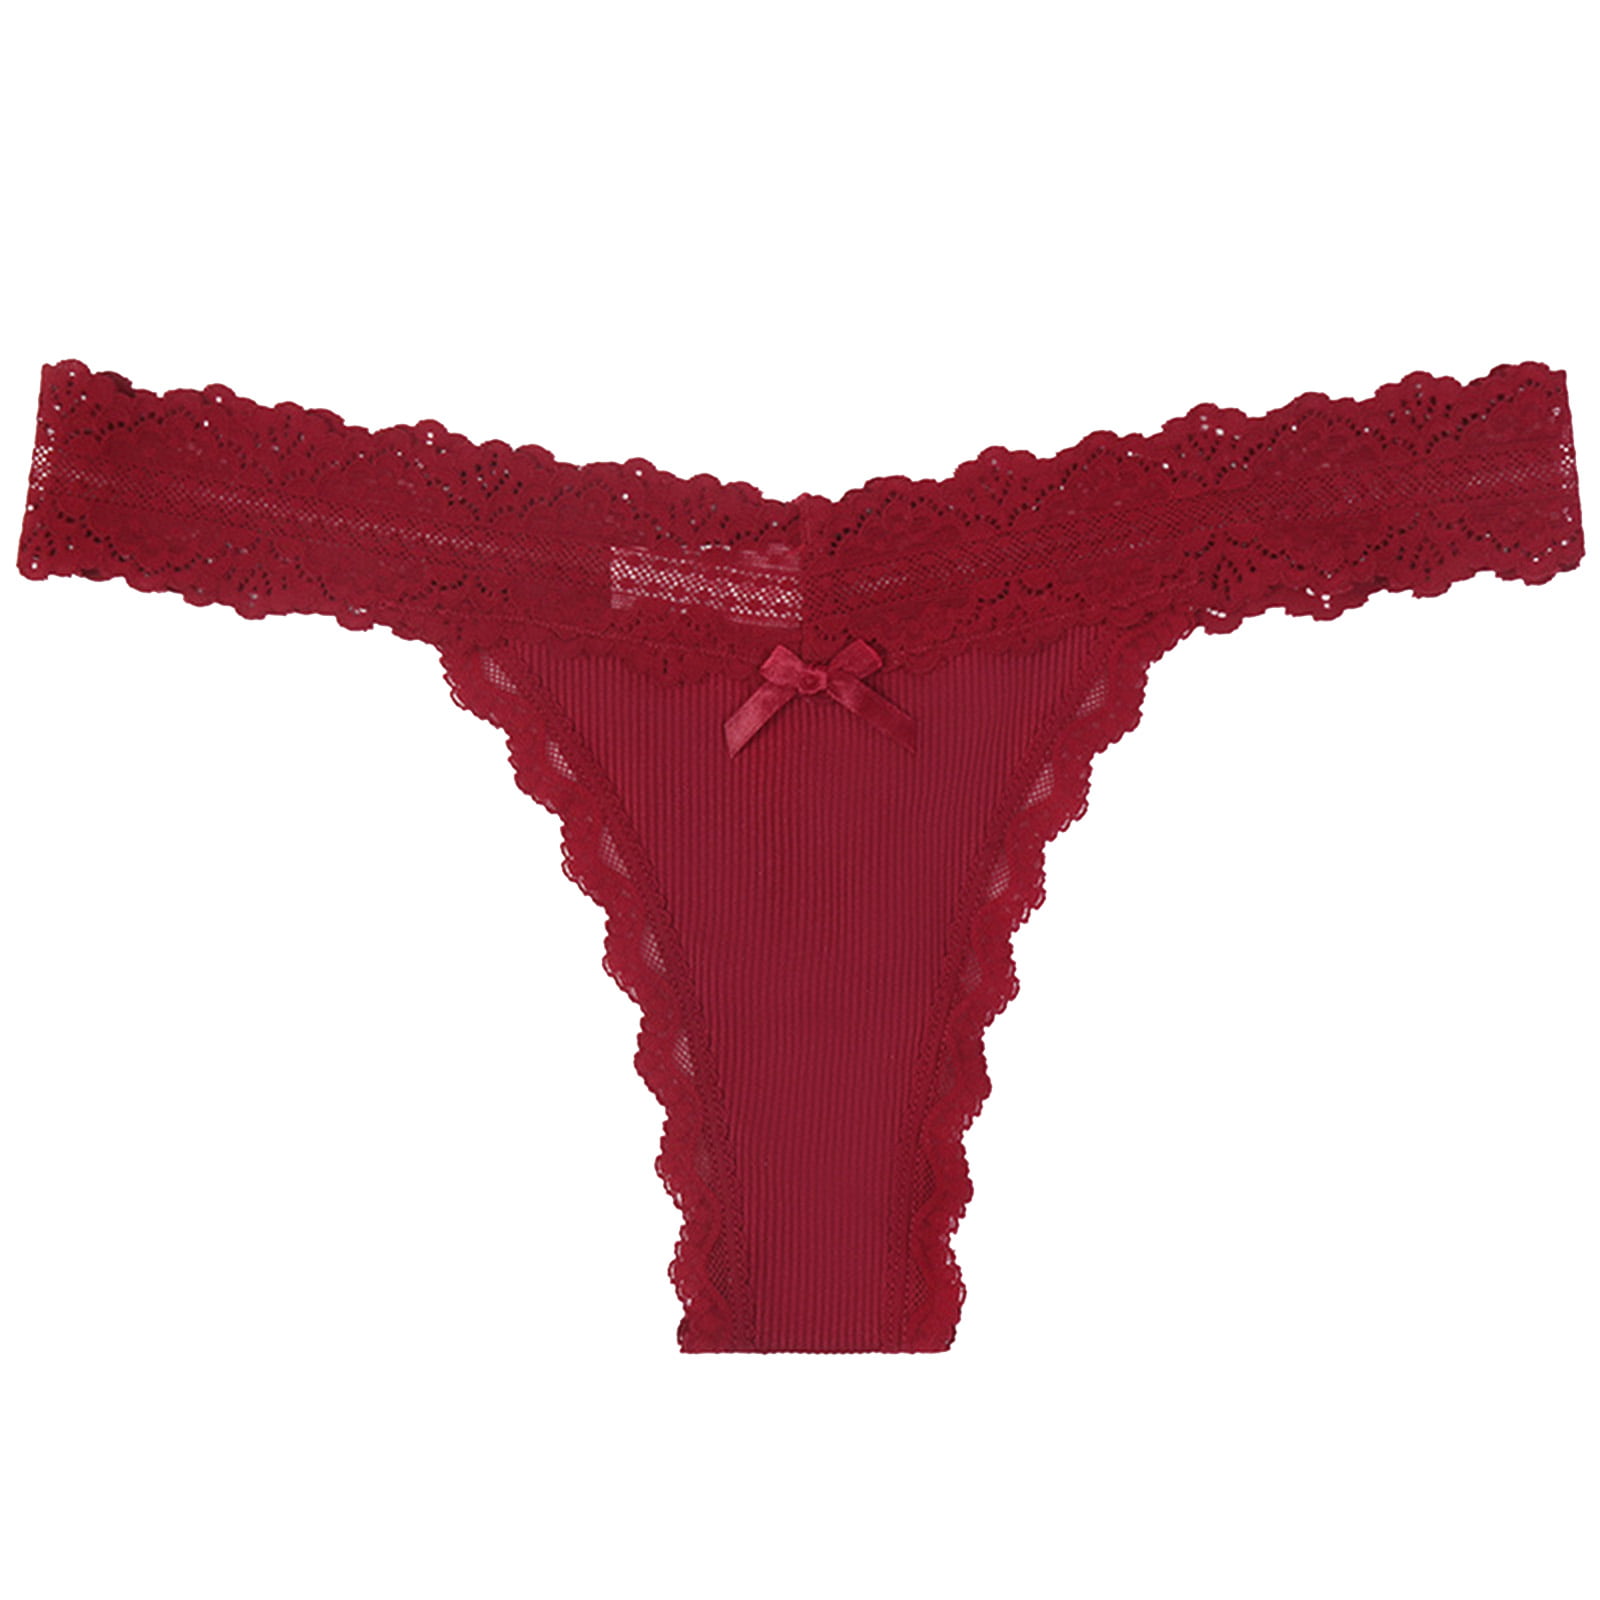 TOWED22 Women Underwear Cotton Panties Plus Size Briefs Breathable Ladies  Soft Panty Cotton Underwear for Women Seamless(Purple,One Size)